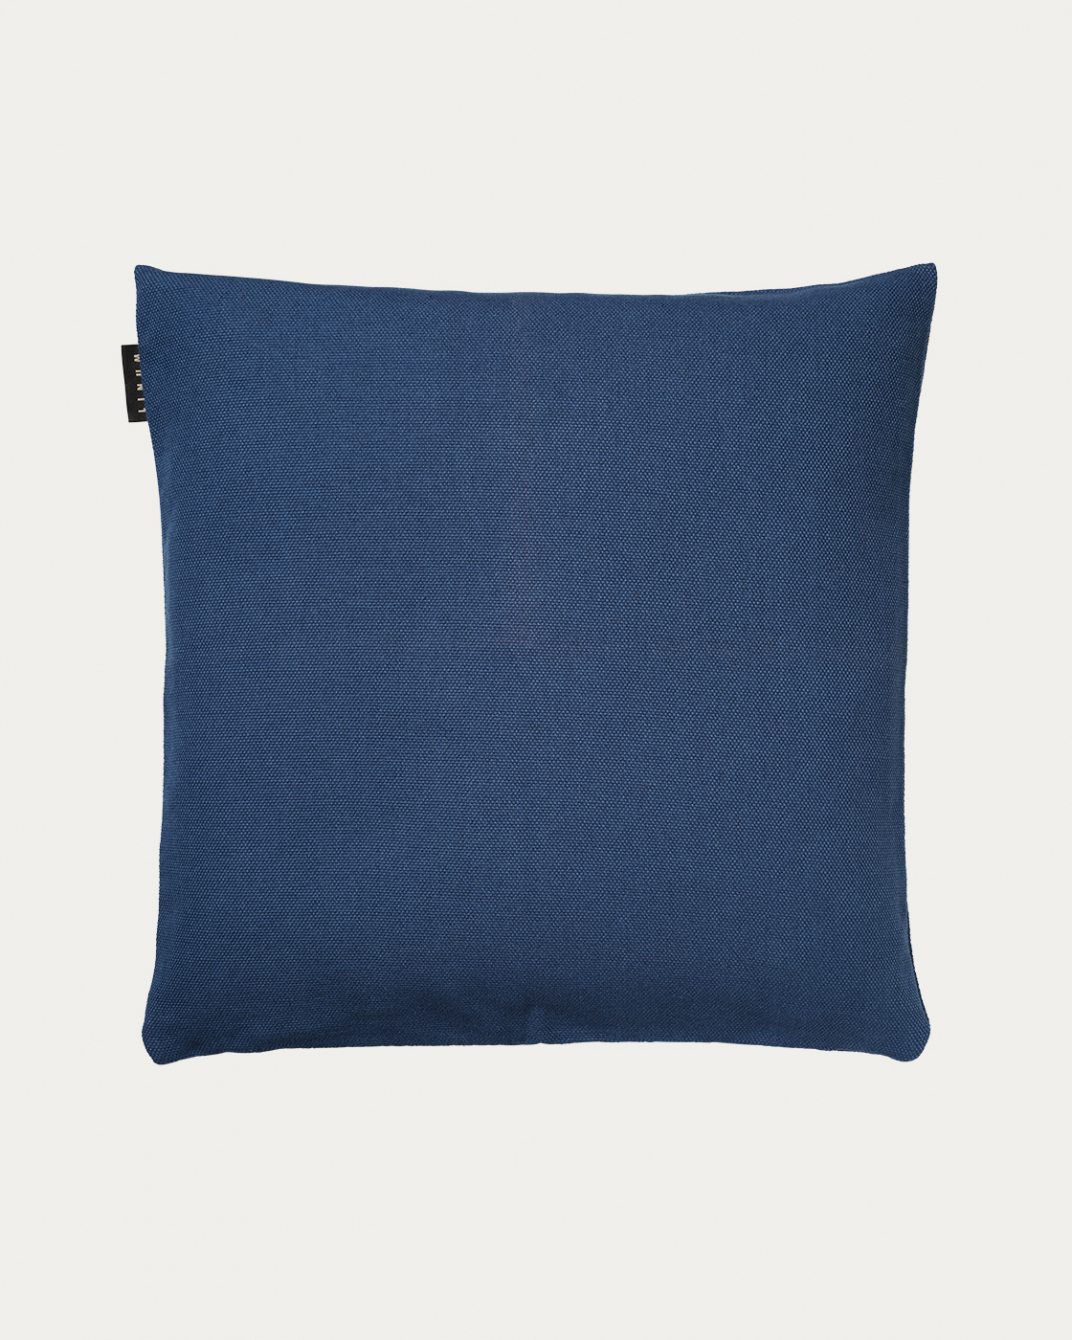 PEPPER Cushion cover 50x50 cm Indigo blue